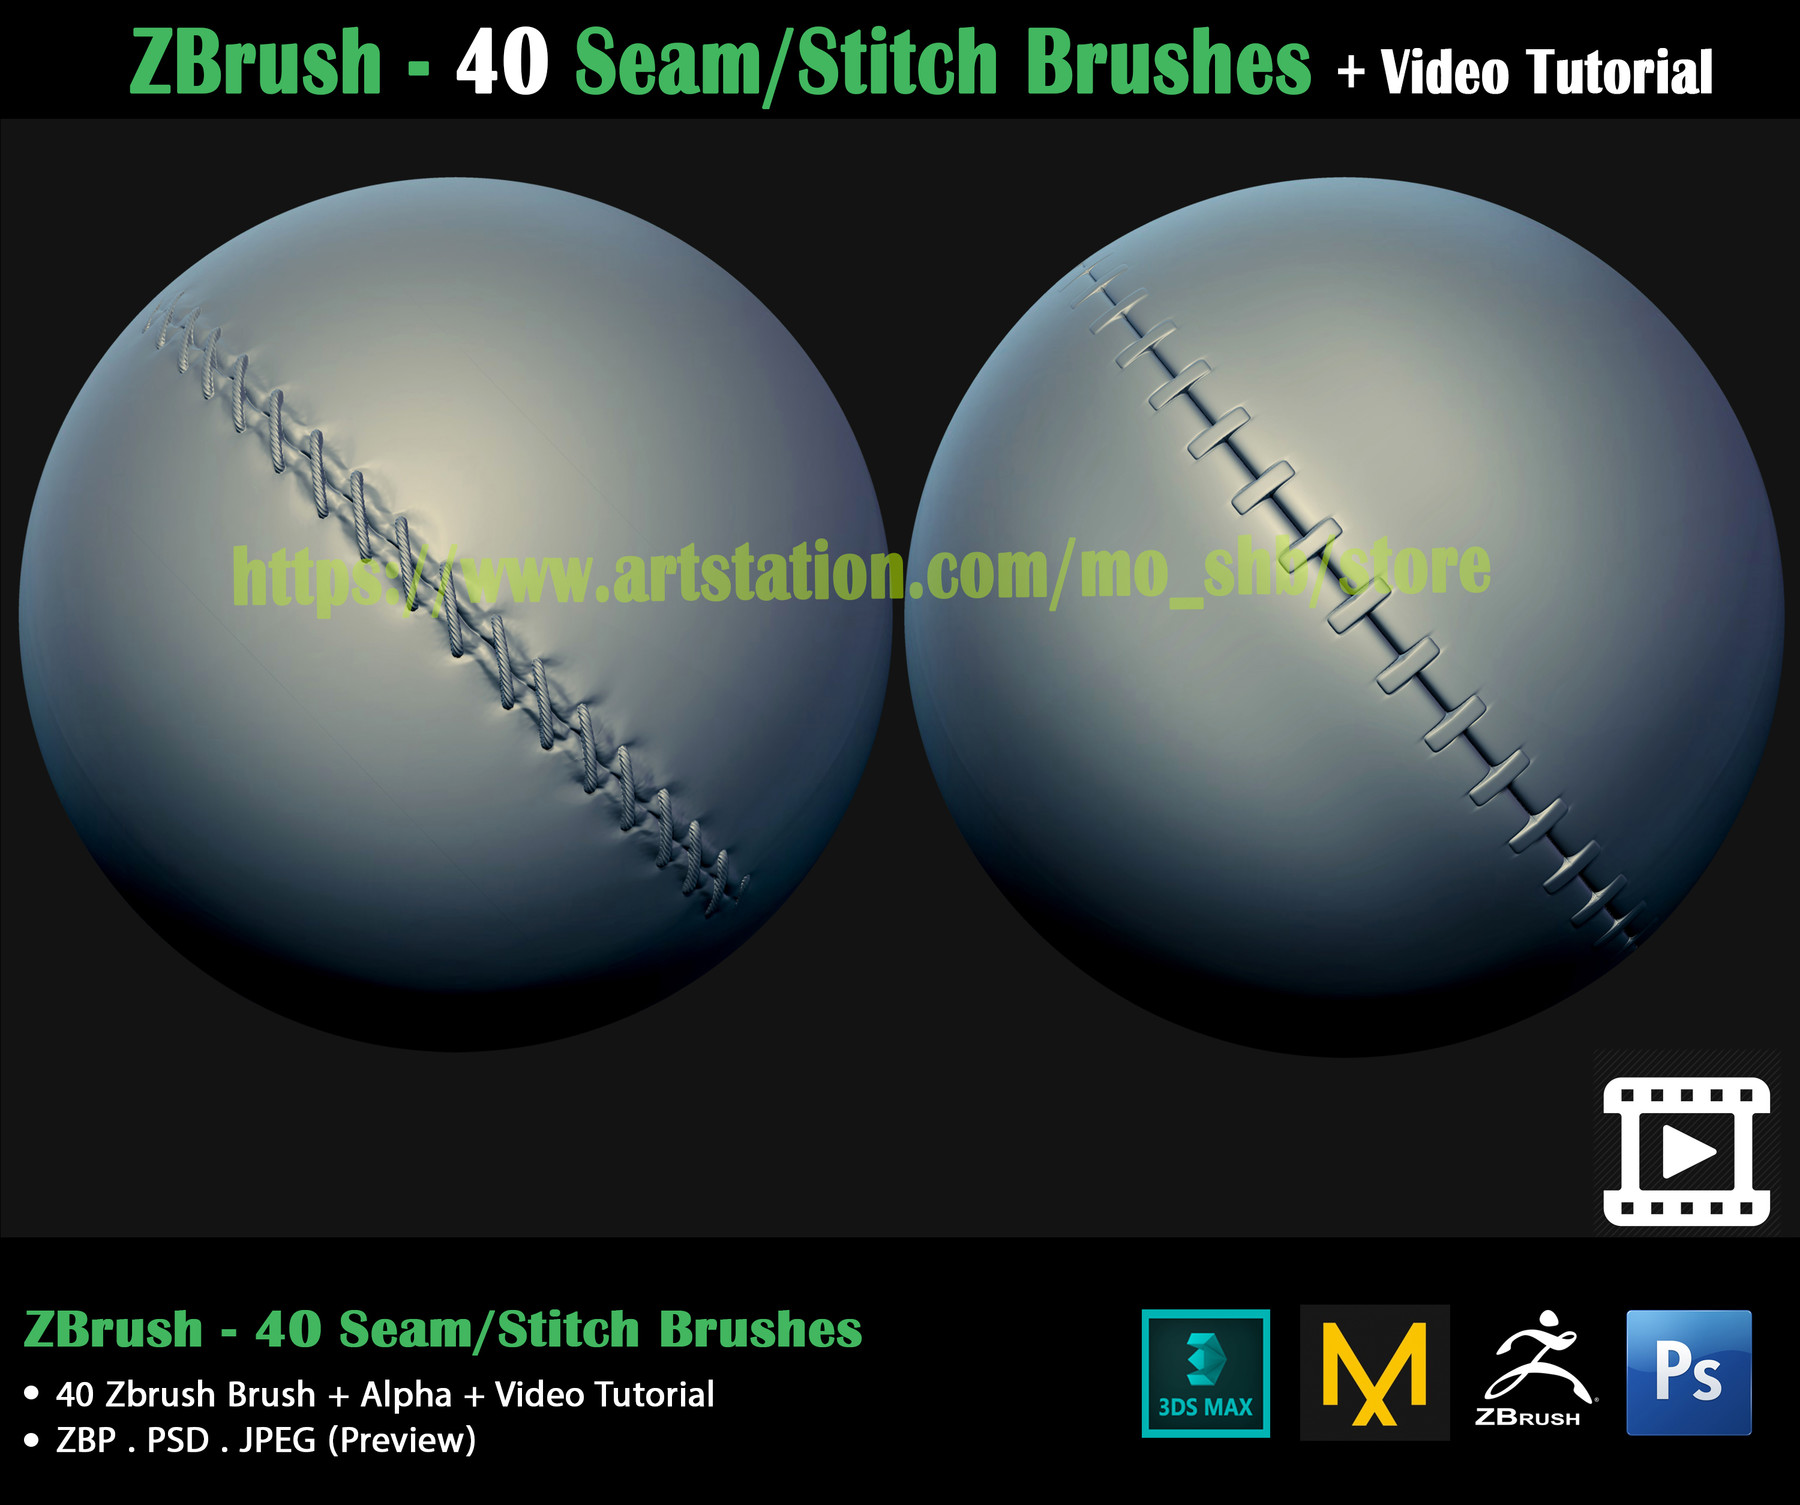 stitches brush zbrush